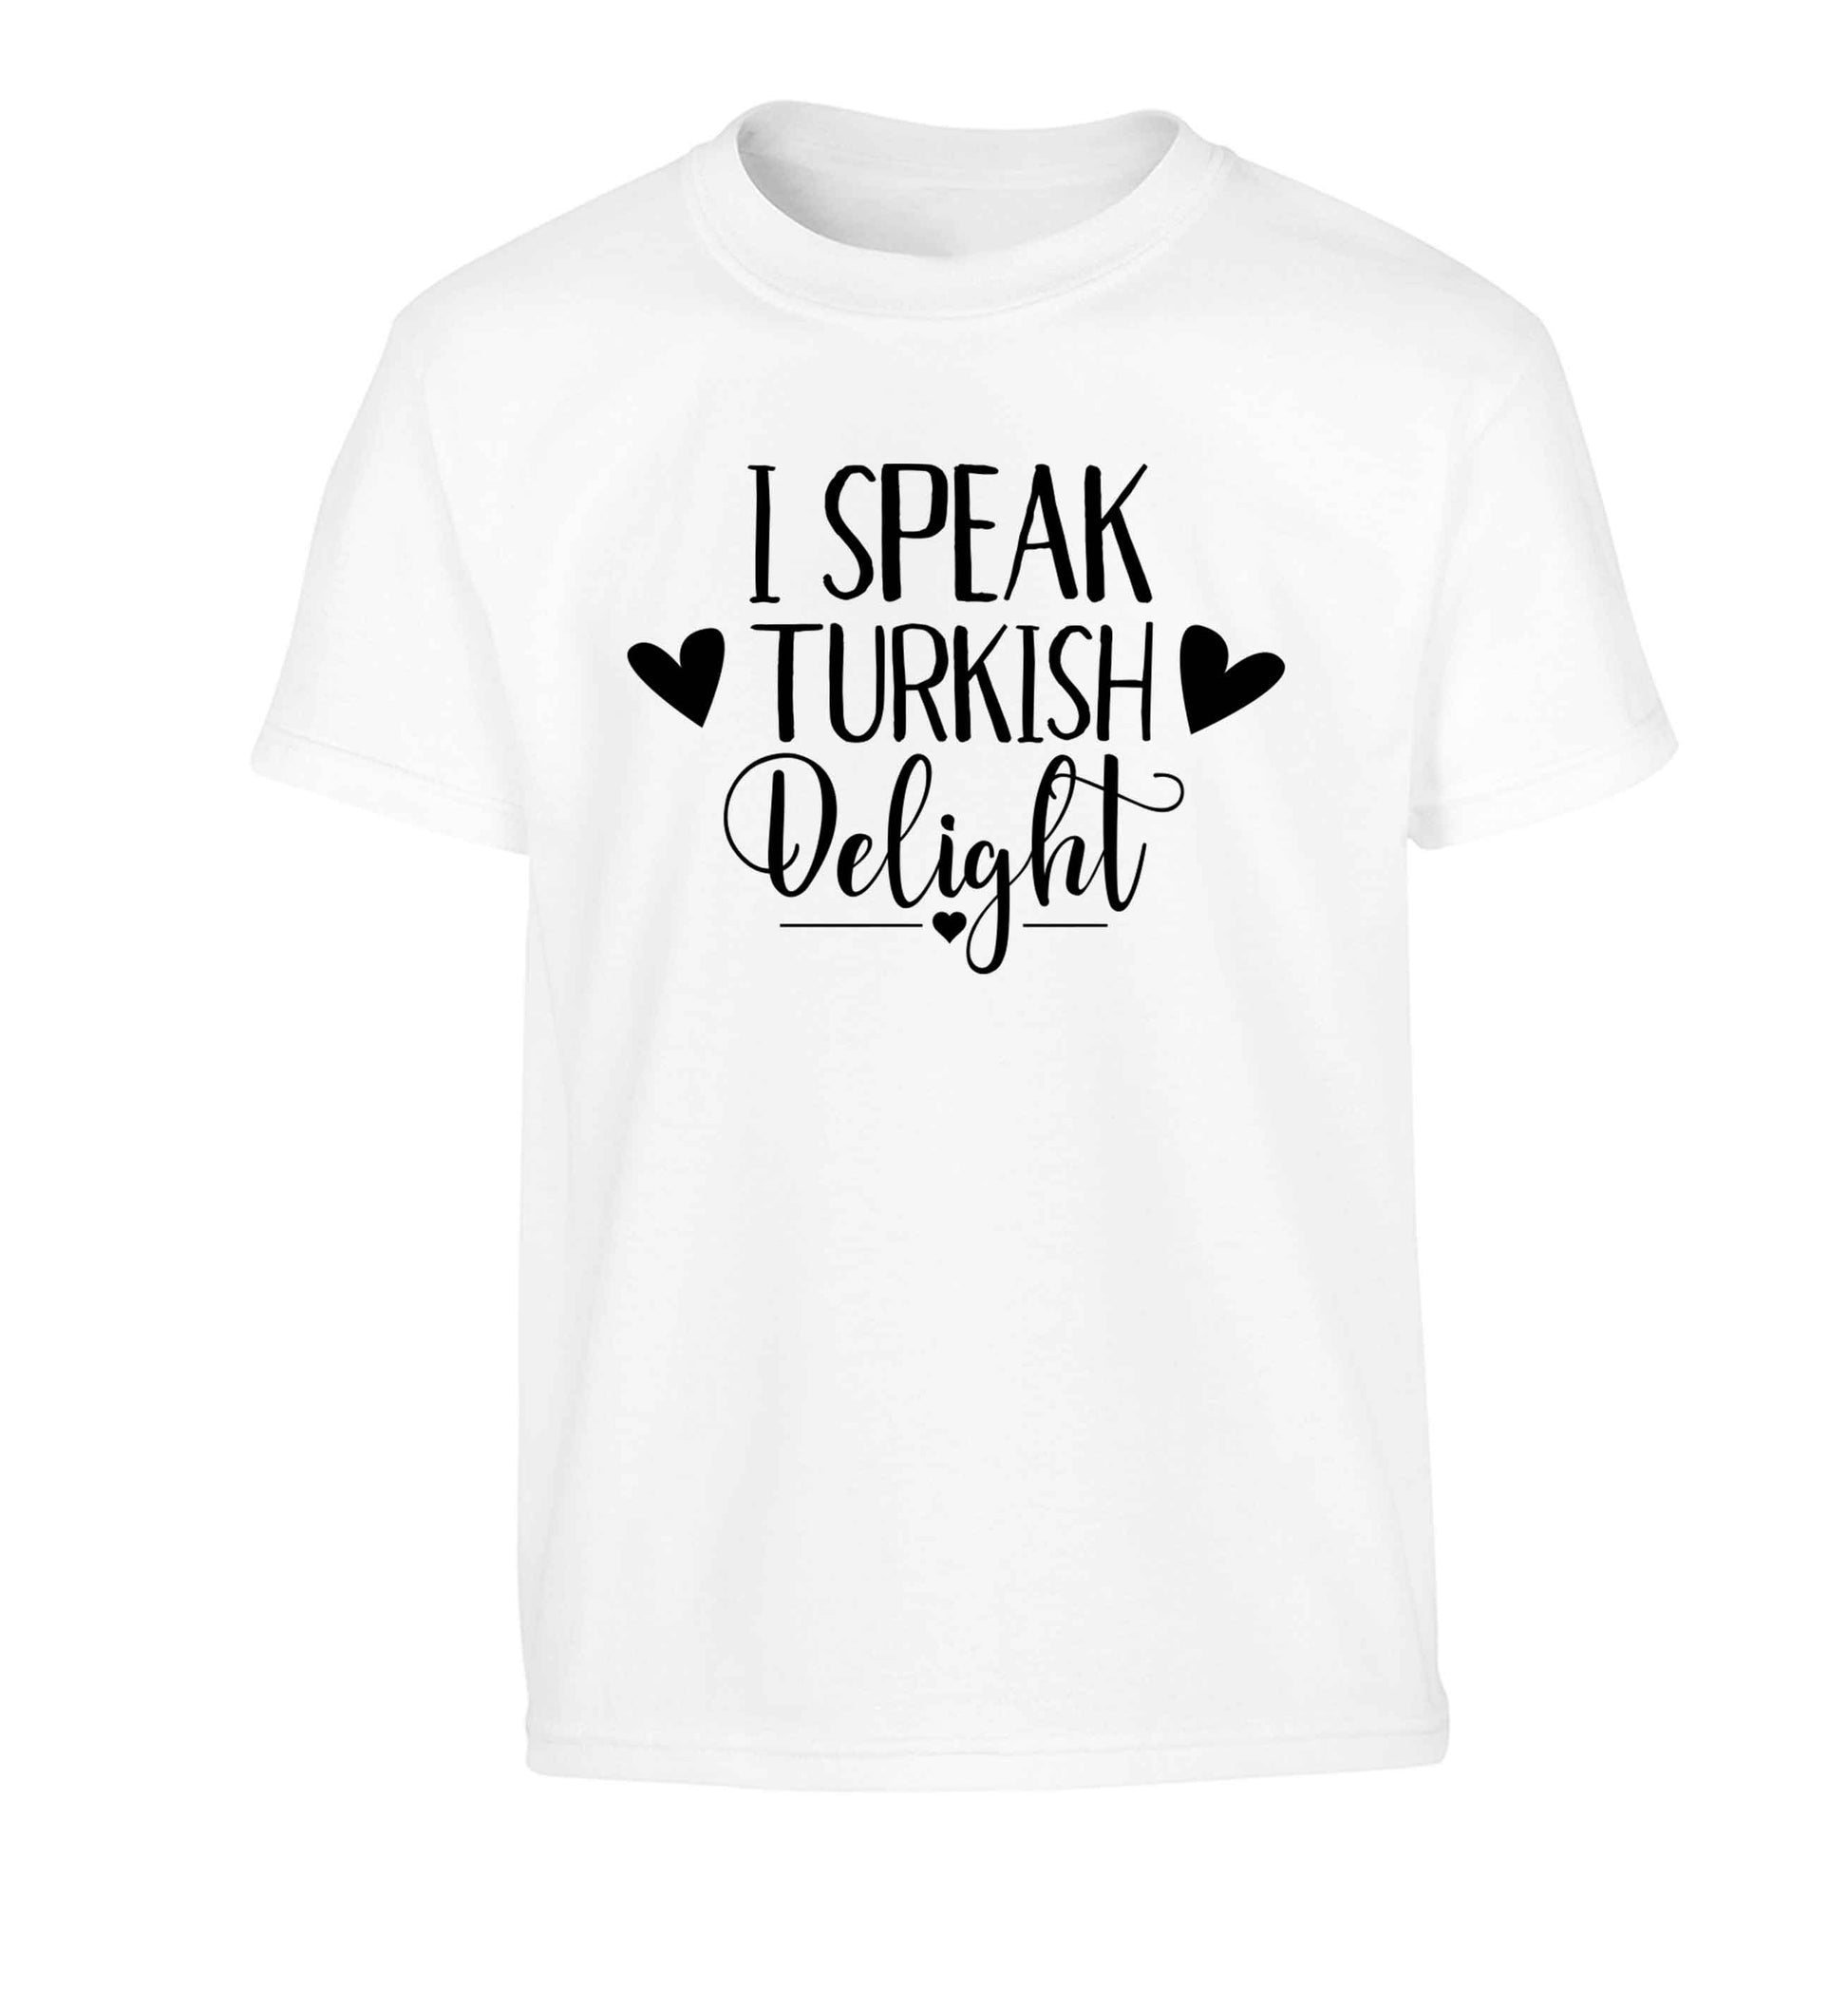 I speak turkish...delight Children's white Tshirt 12-13 Years